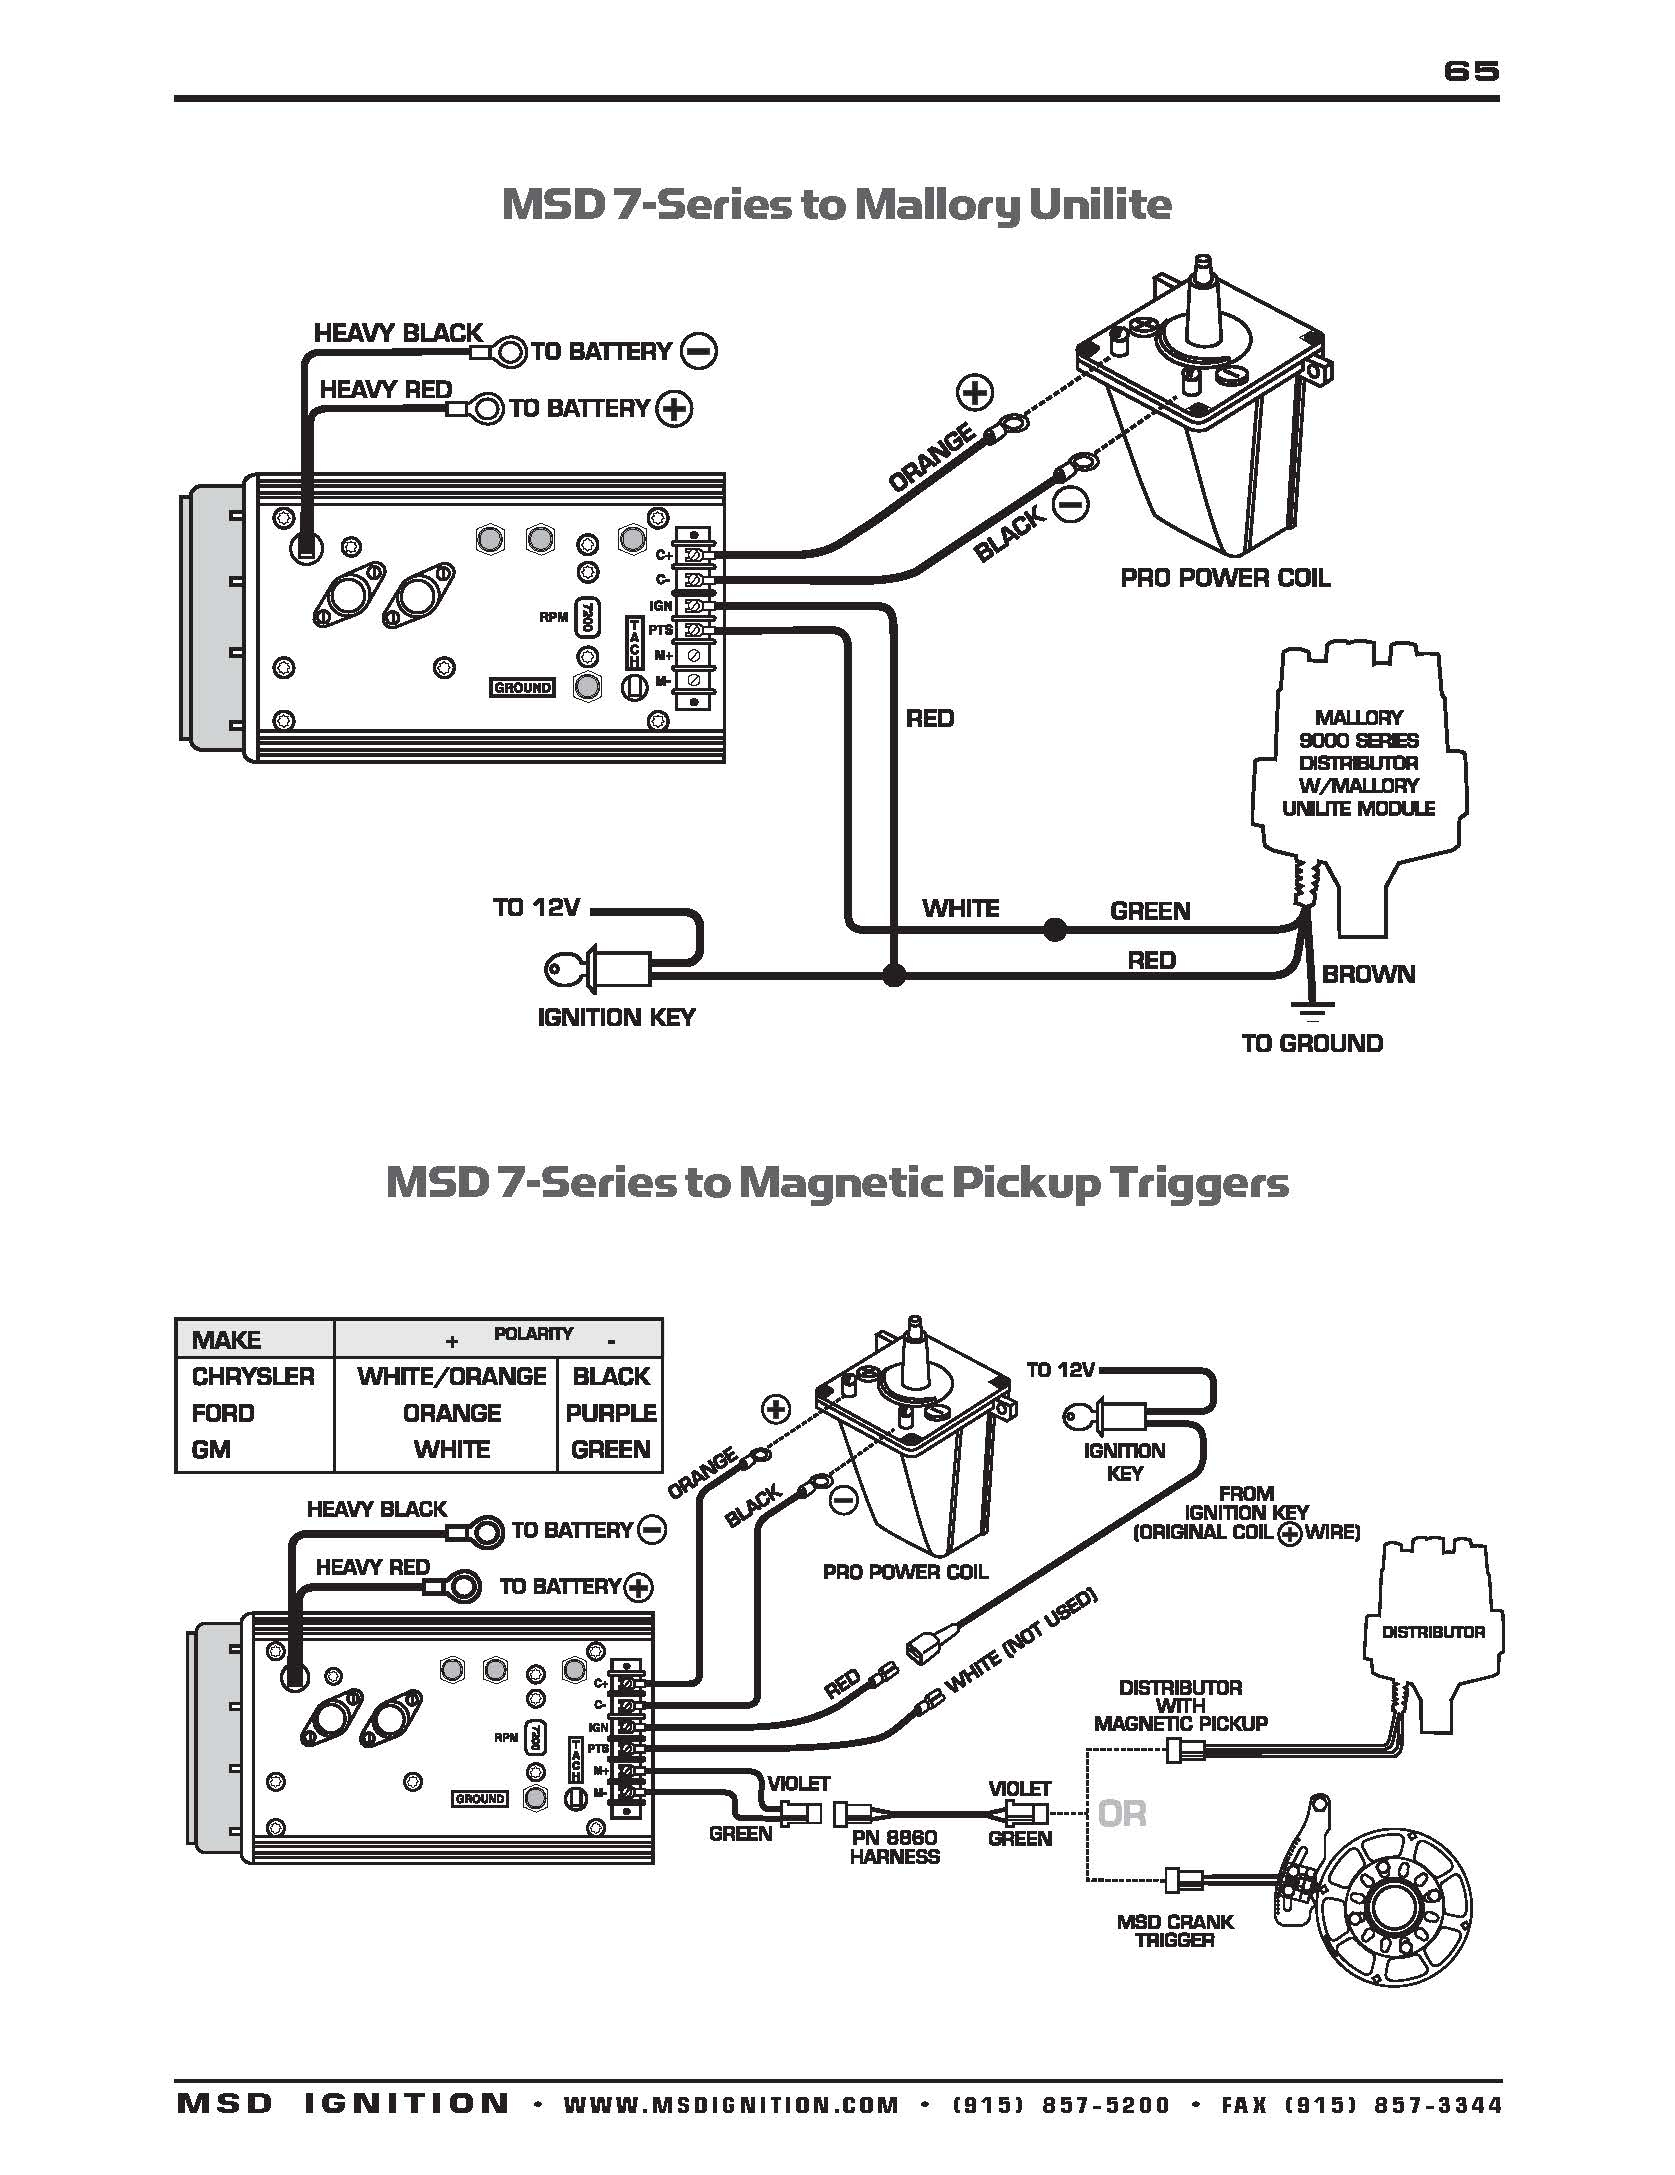 Msd Distributor Wiring Diagram - Cadician's Blog